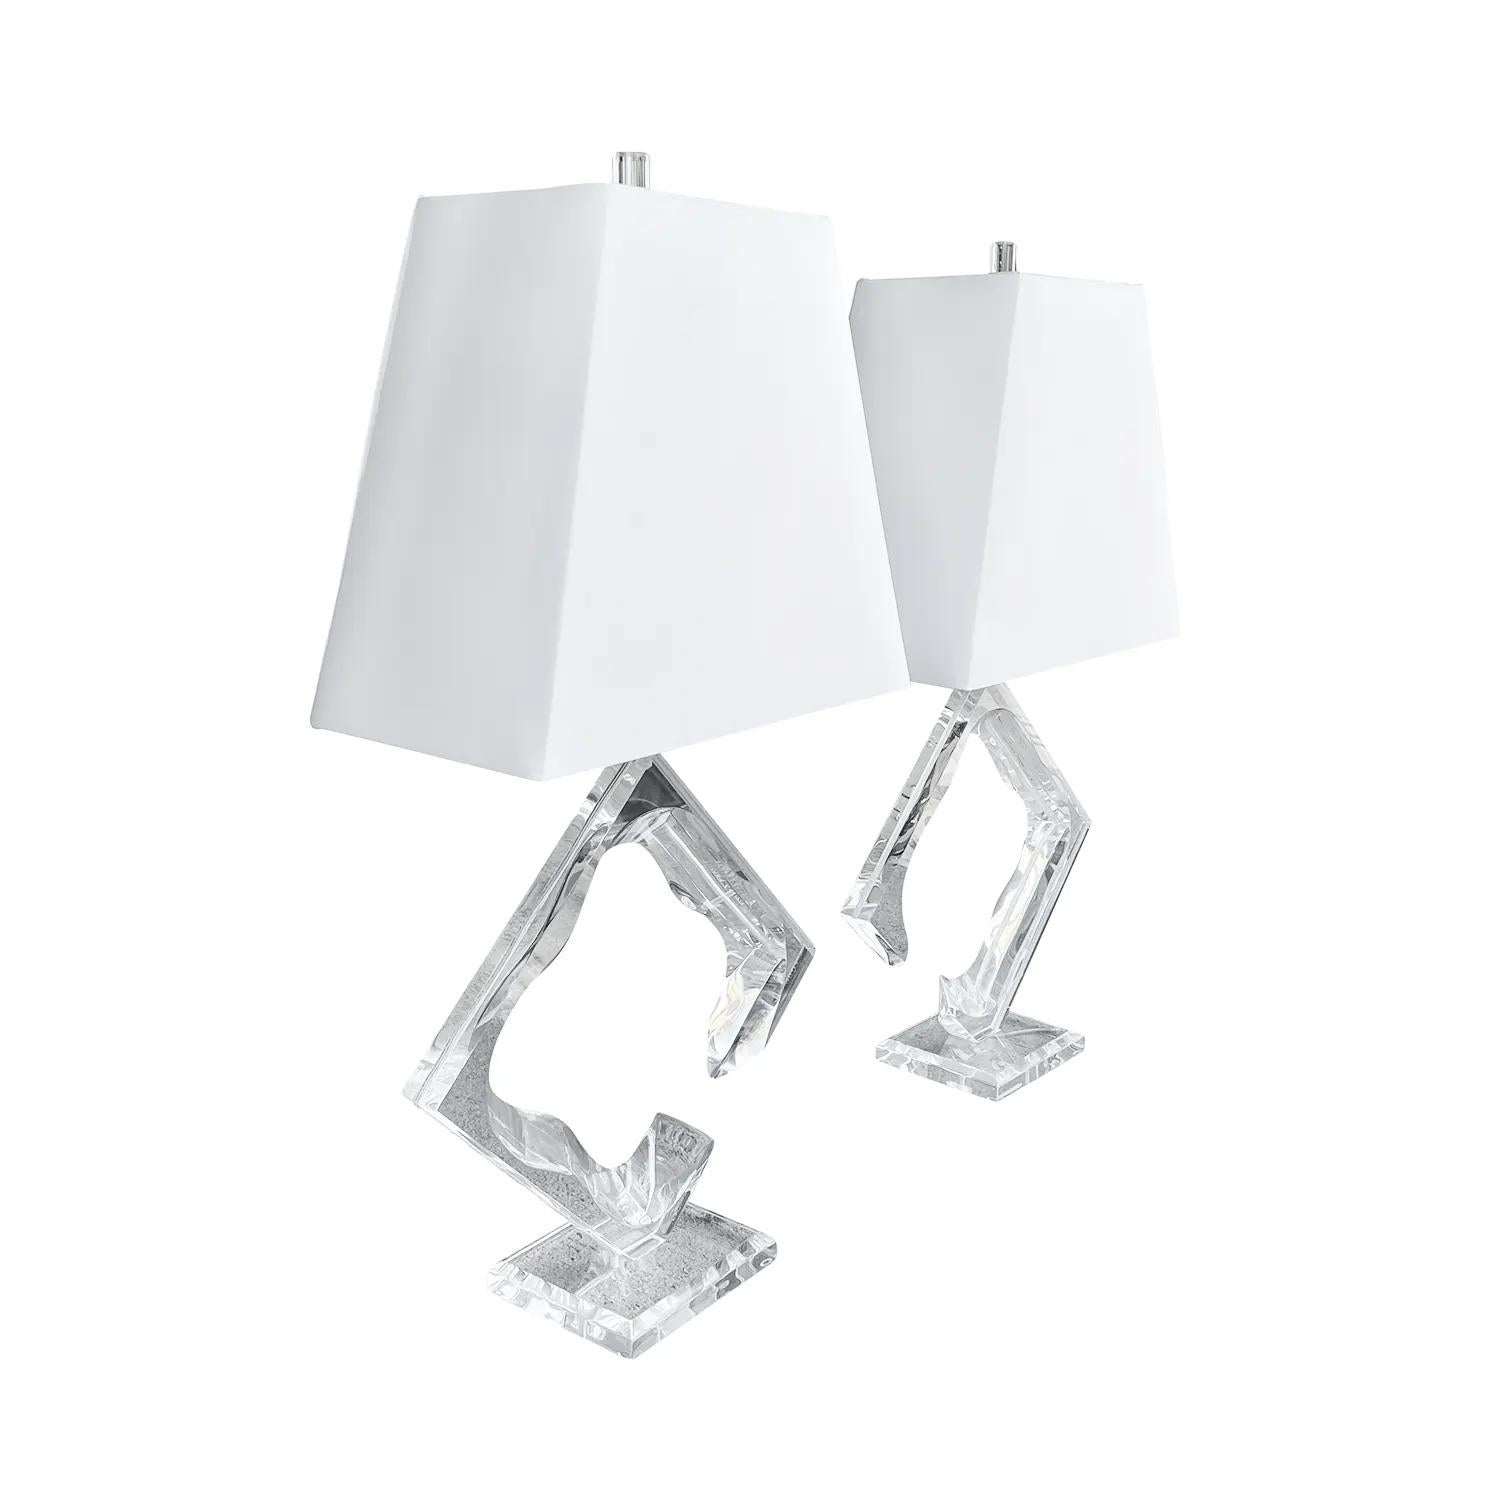 Mid-Century Modern 20th Century American Pair of Acrylic Table Lamps, Desk Lights by Hivo Van Teal